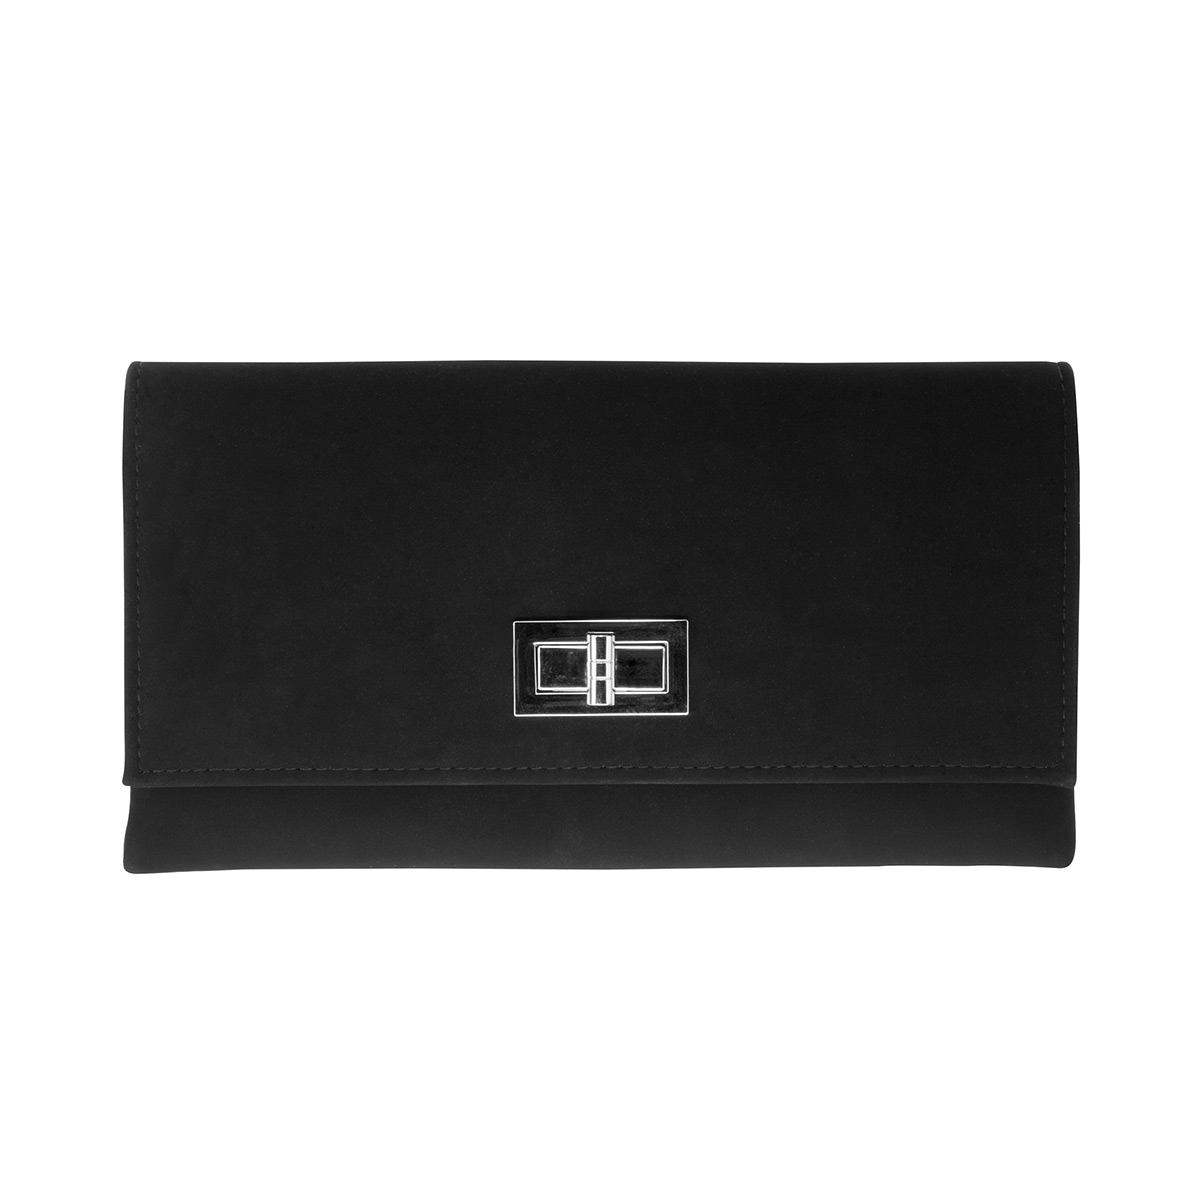 Touch Ups Handbags HB907-B907